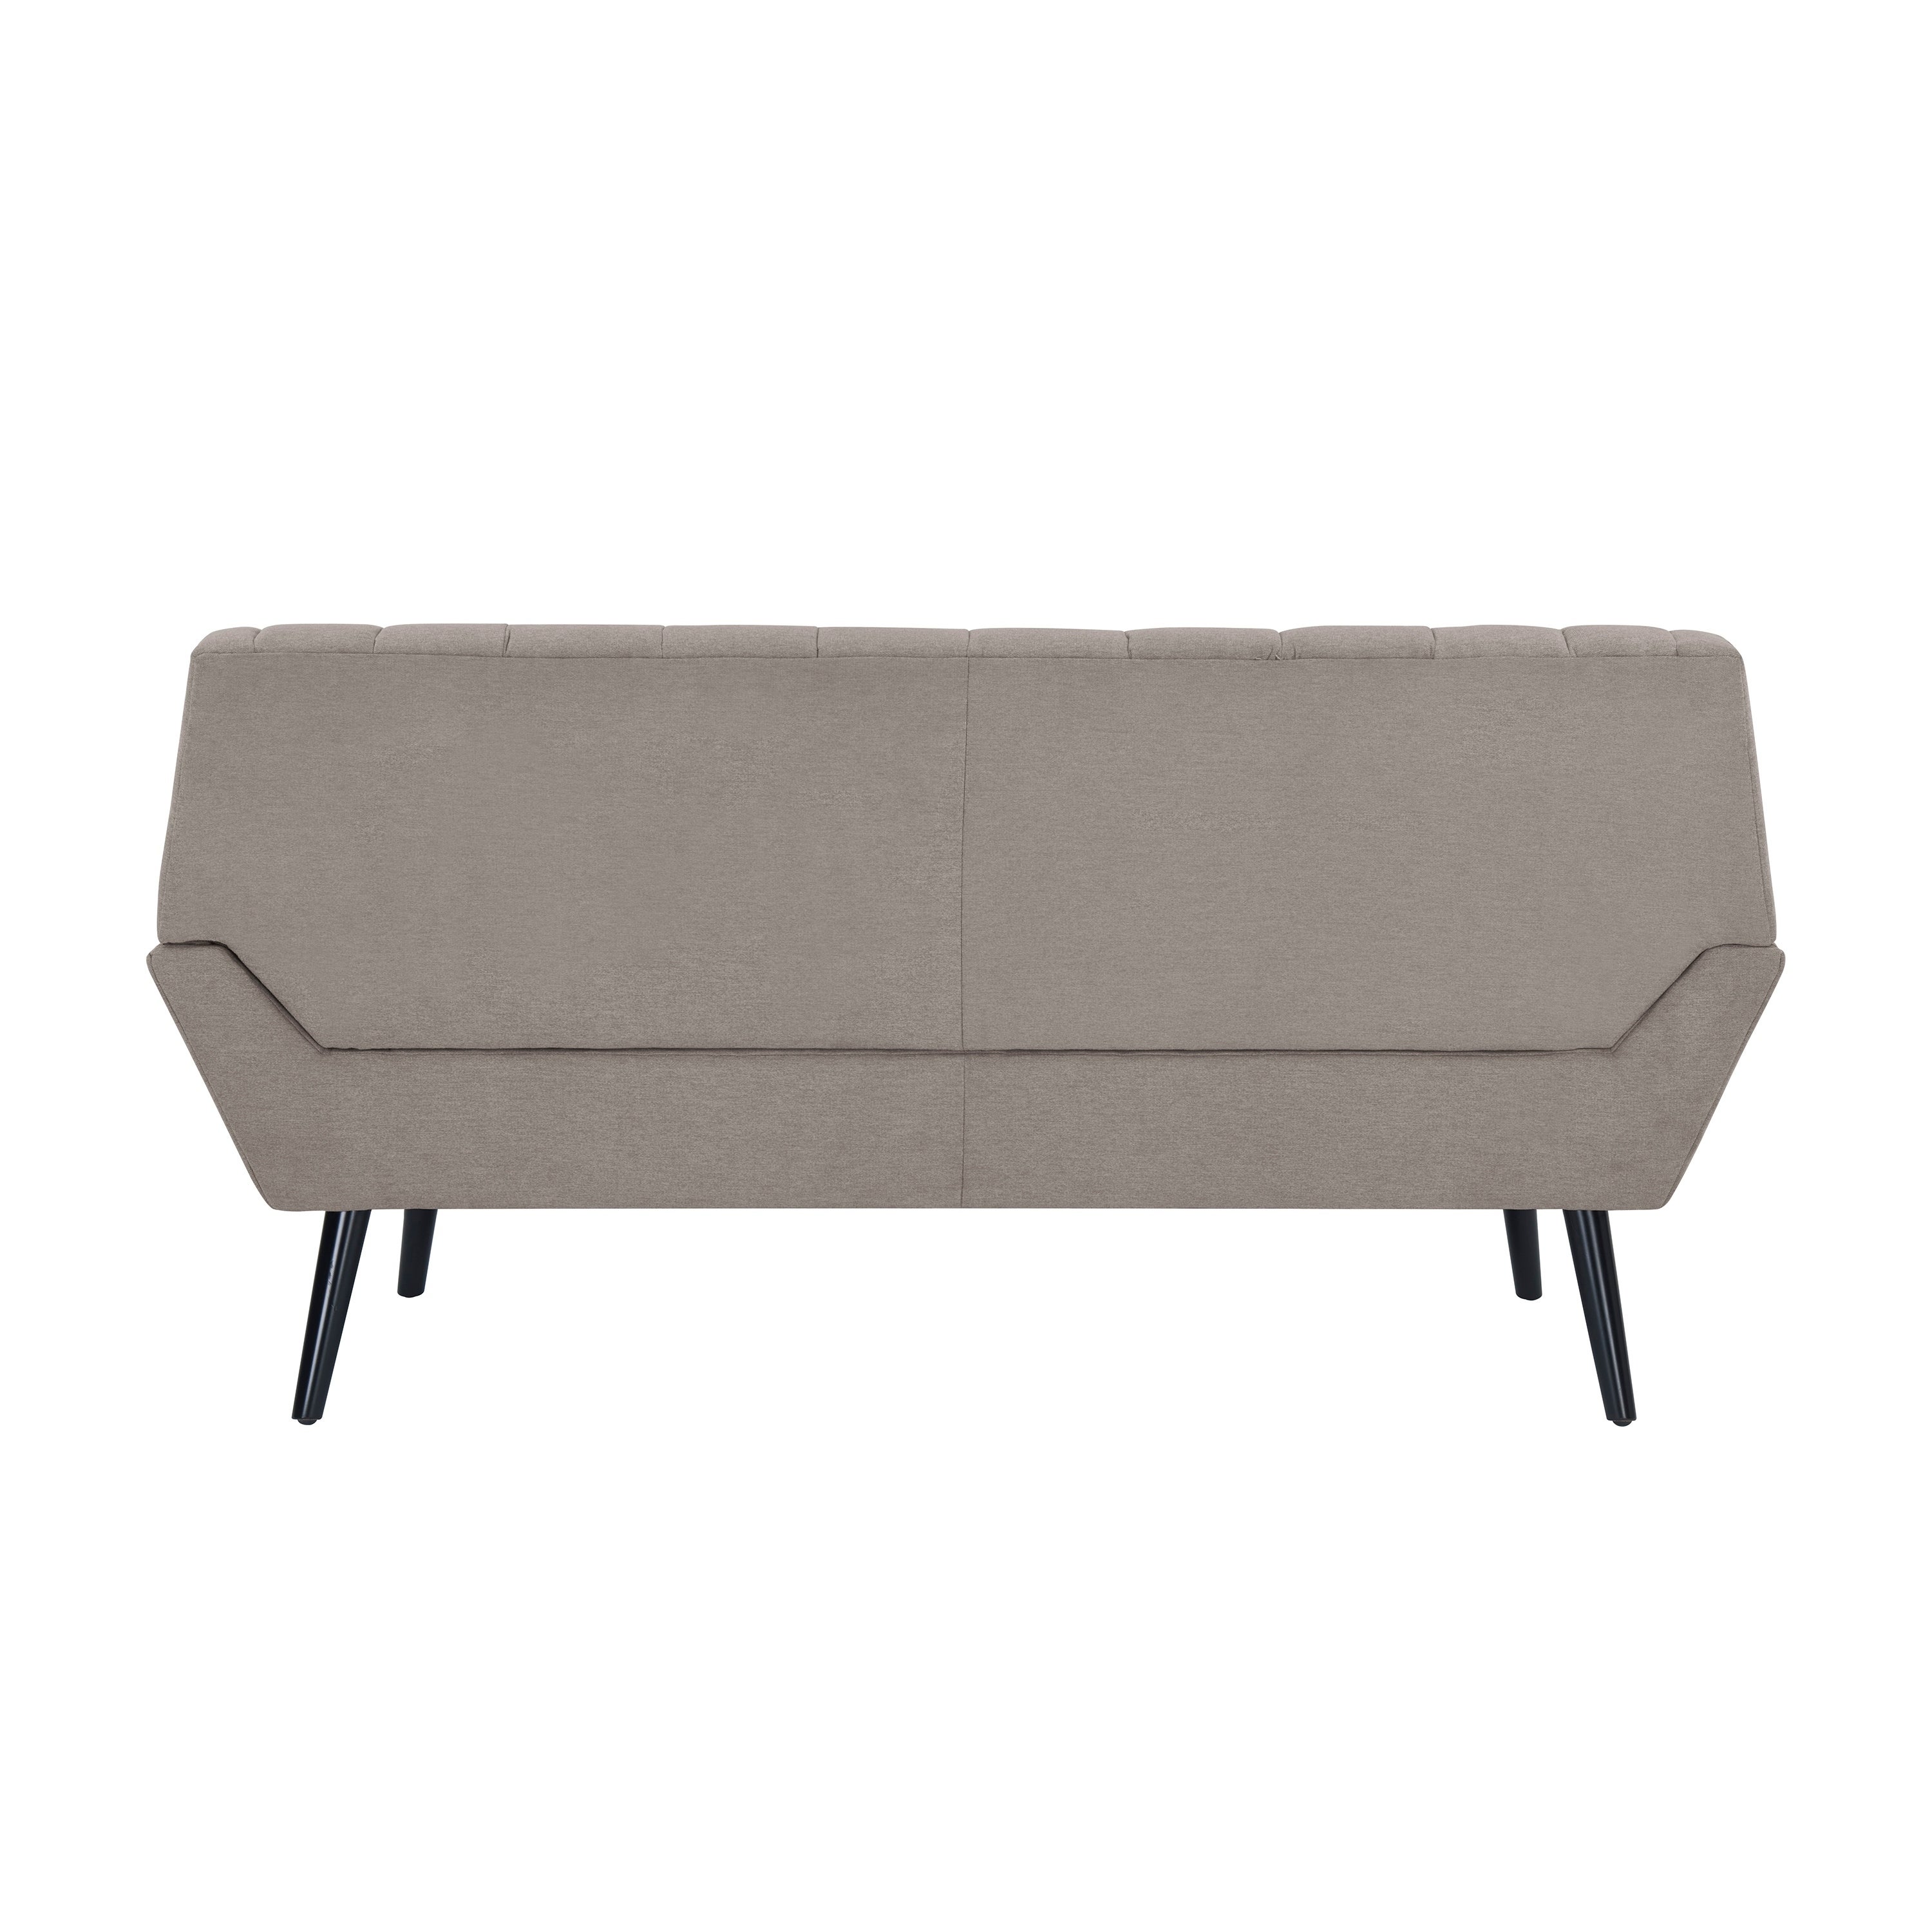 Green Sectional Sofa $150 - $205 by Kingbird Furniture Company 11